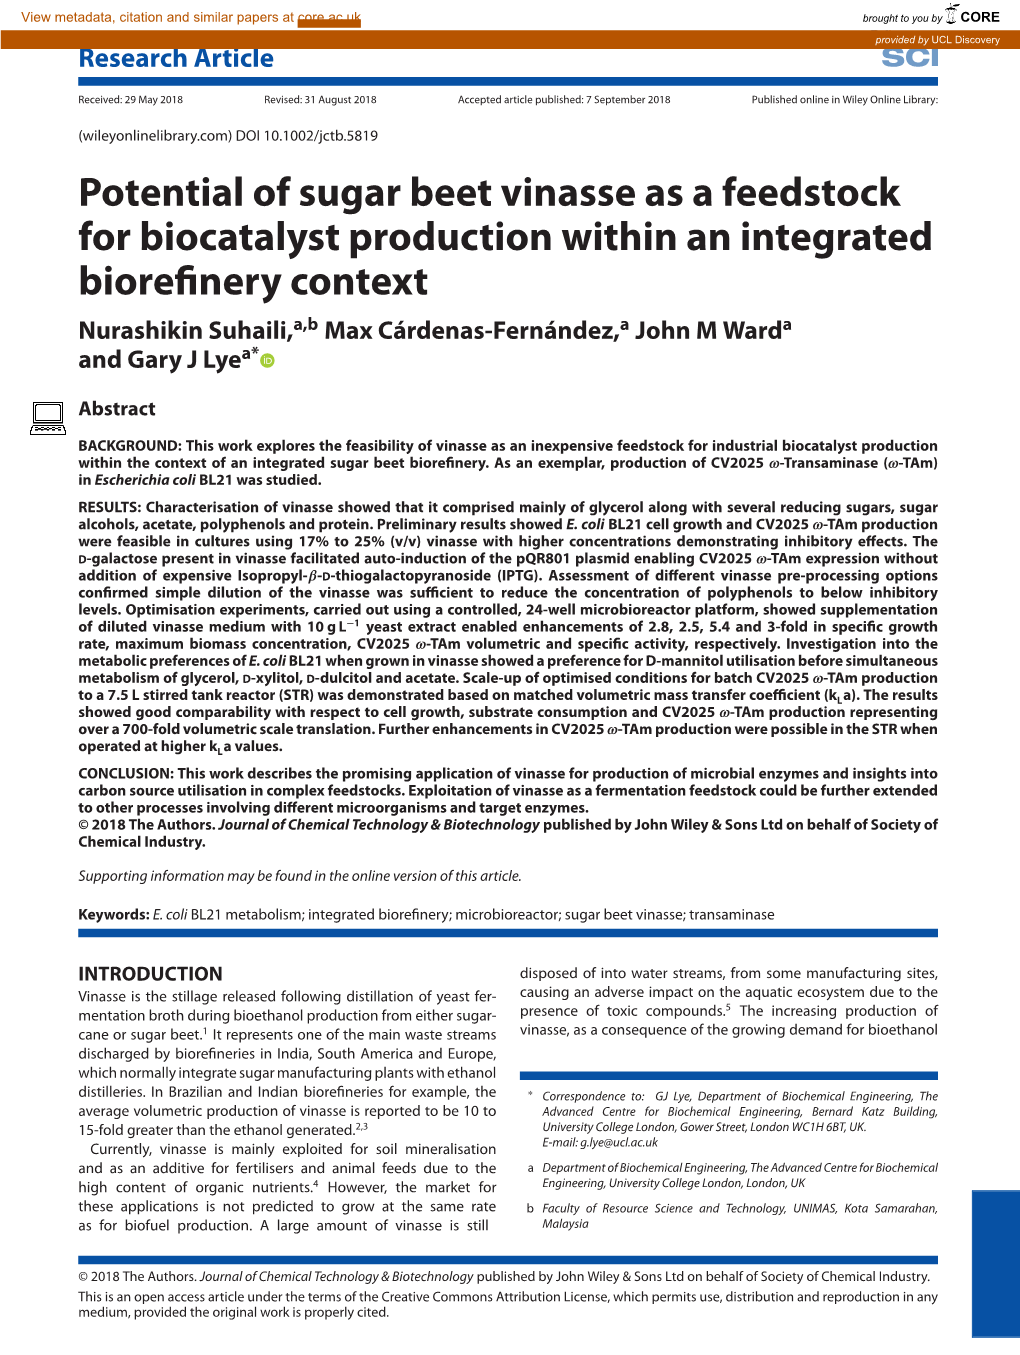 Potential of Sugar Beet Vinasse As a Feedstock For